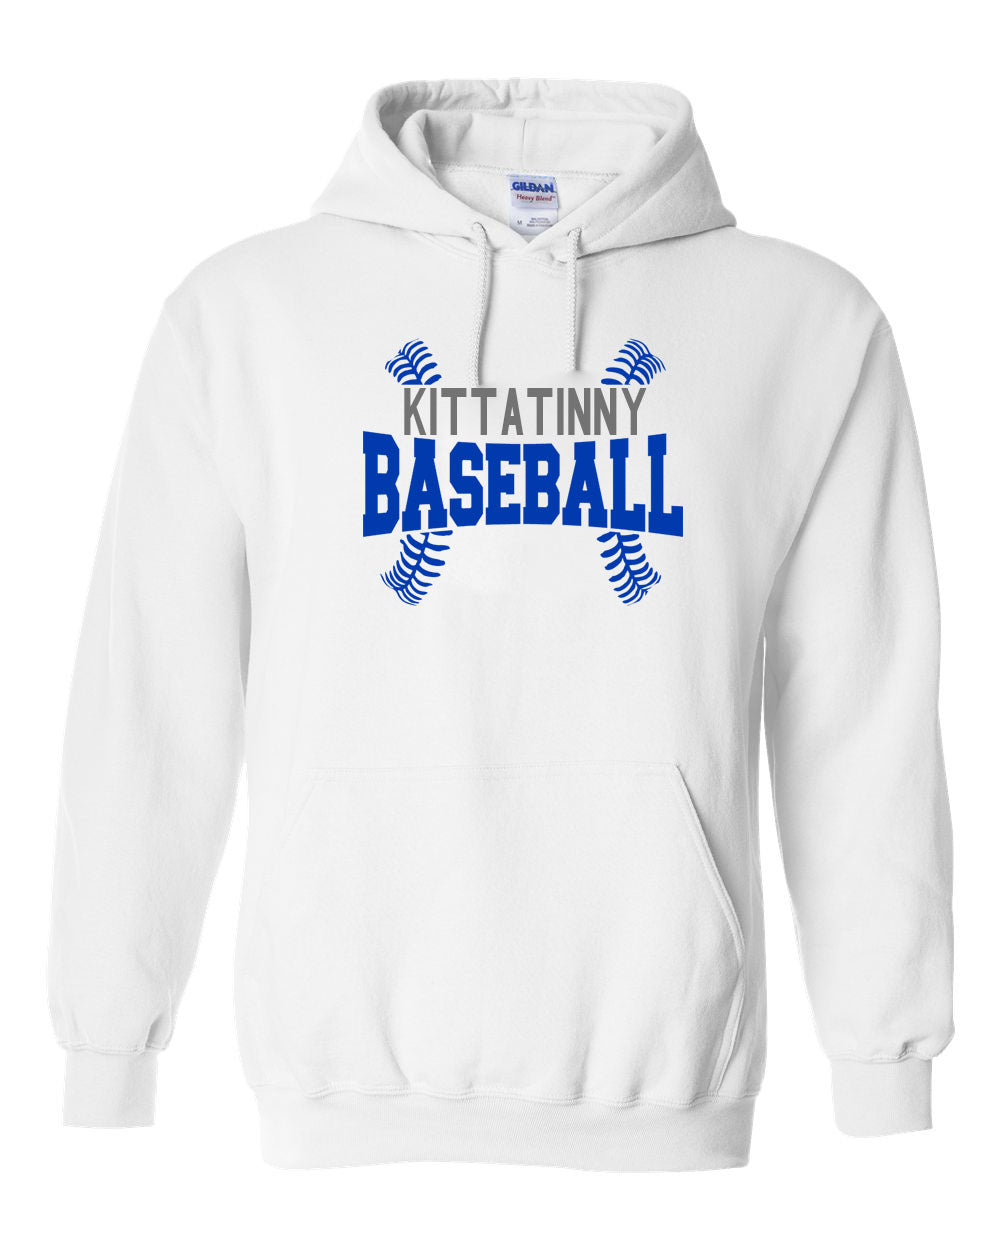 Kittatinny Baseball Hooded Sweatshirt